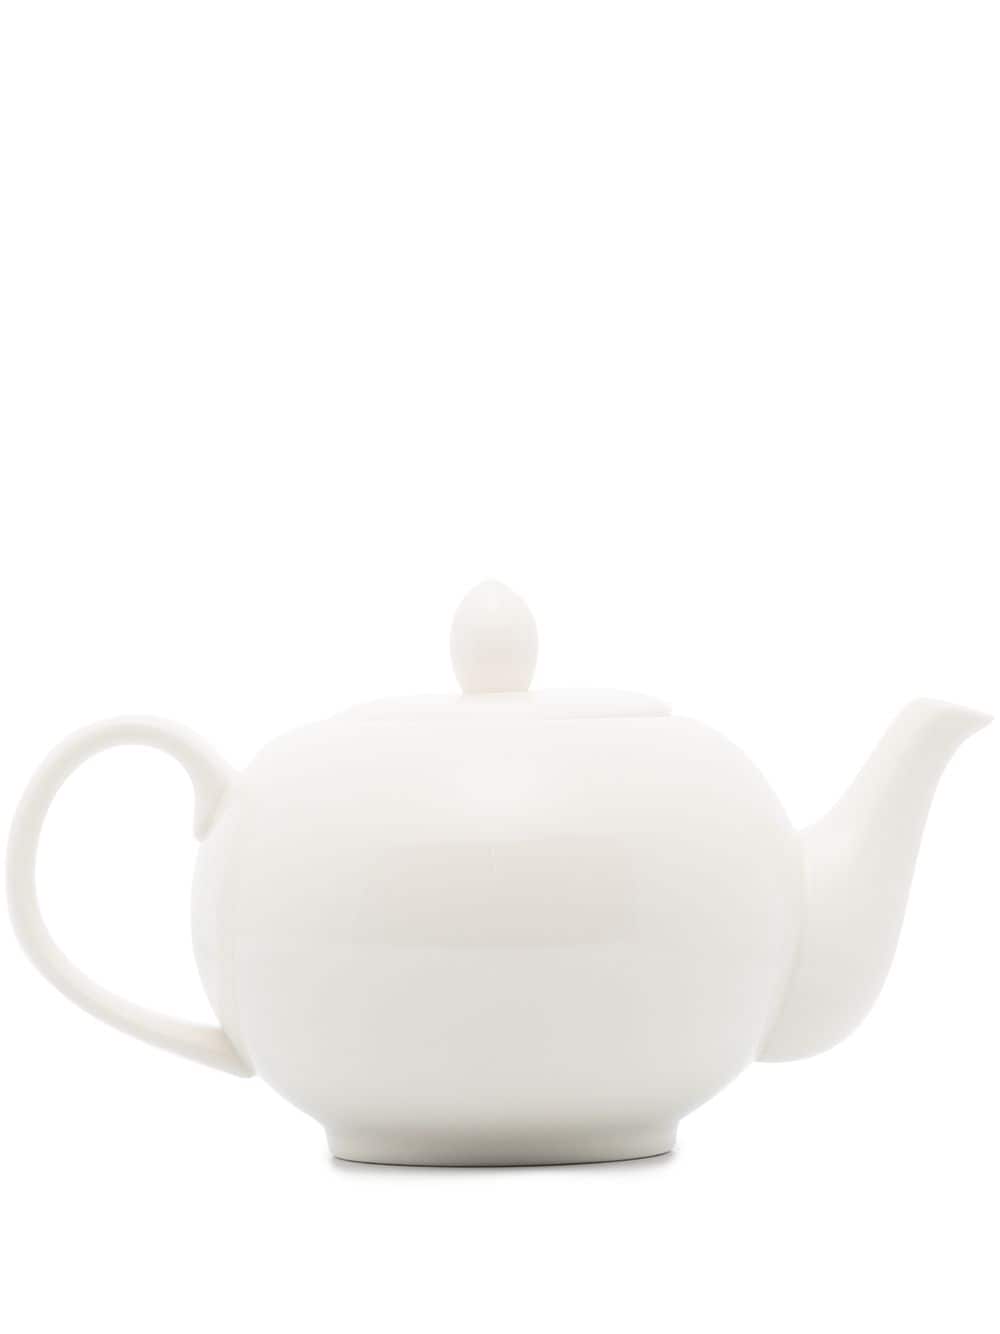 POLSPOTTEN Undressed teapot (1100ml) - White von POLSPOTTEN